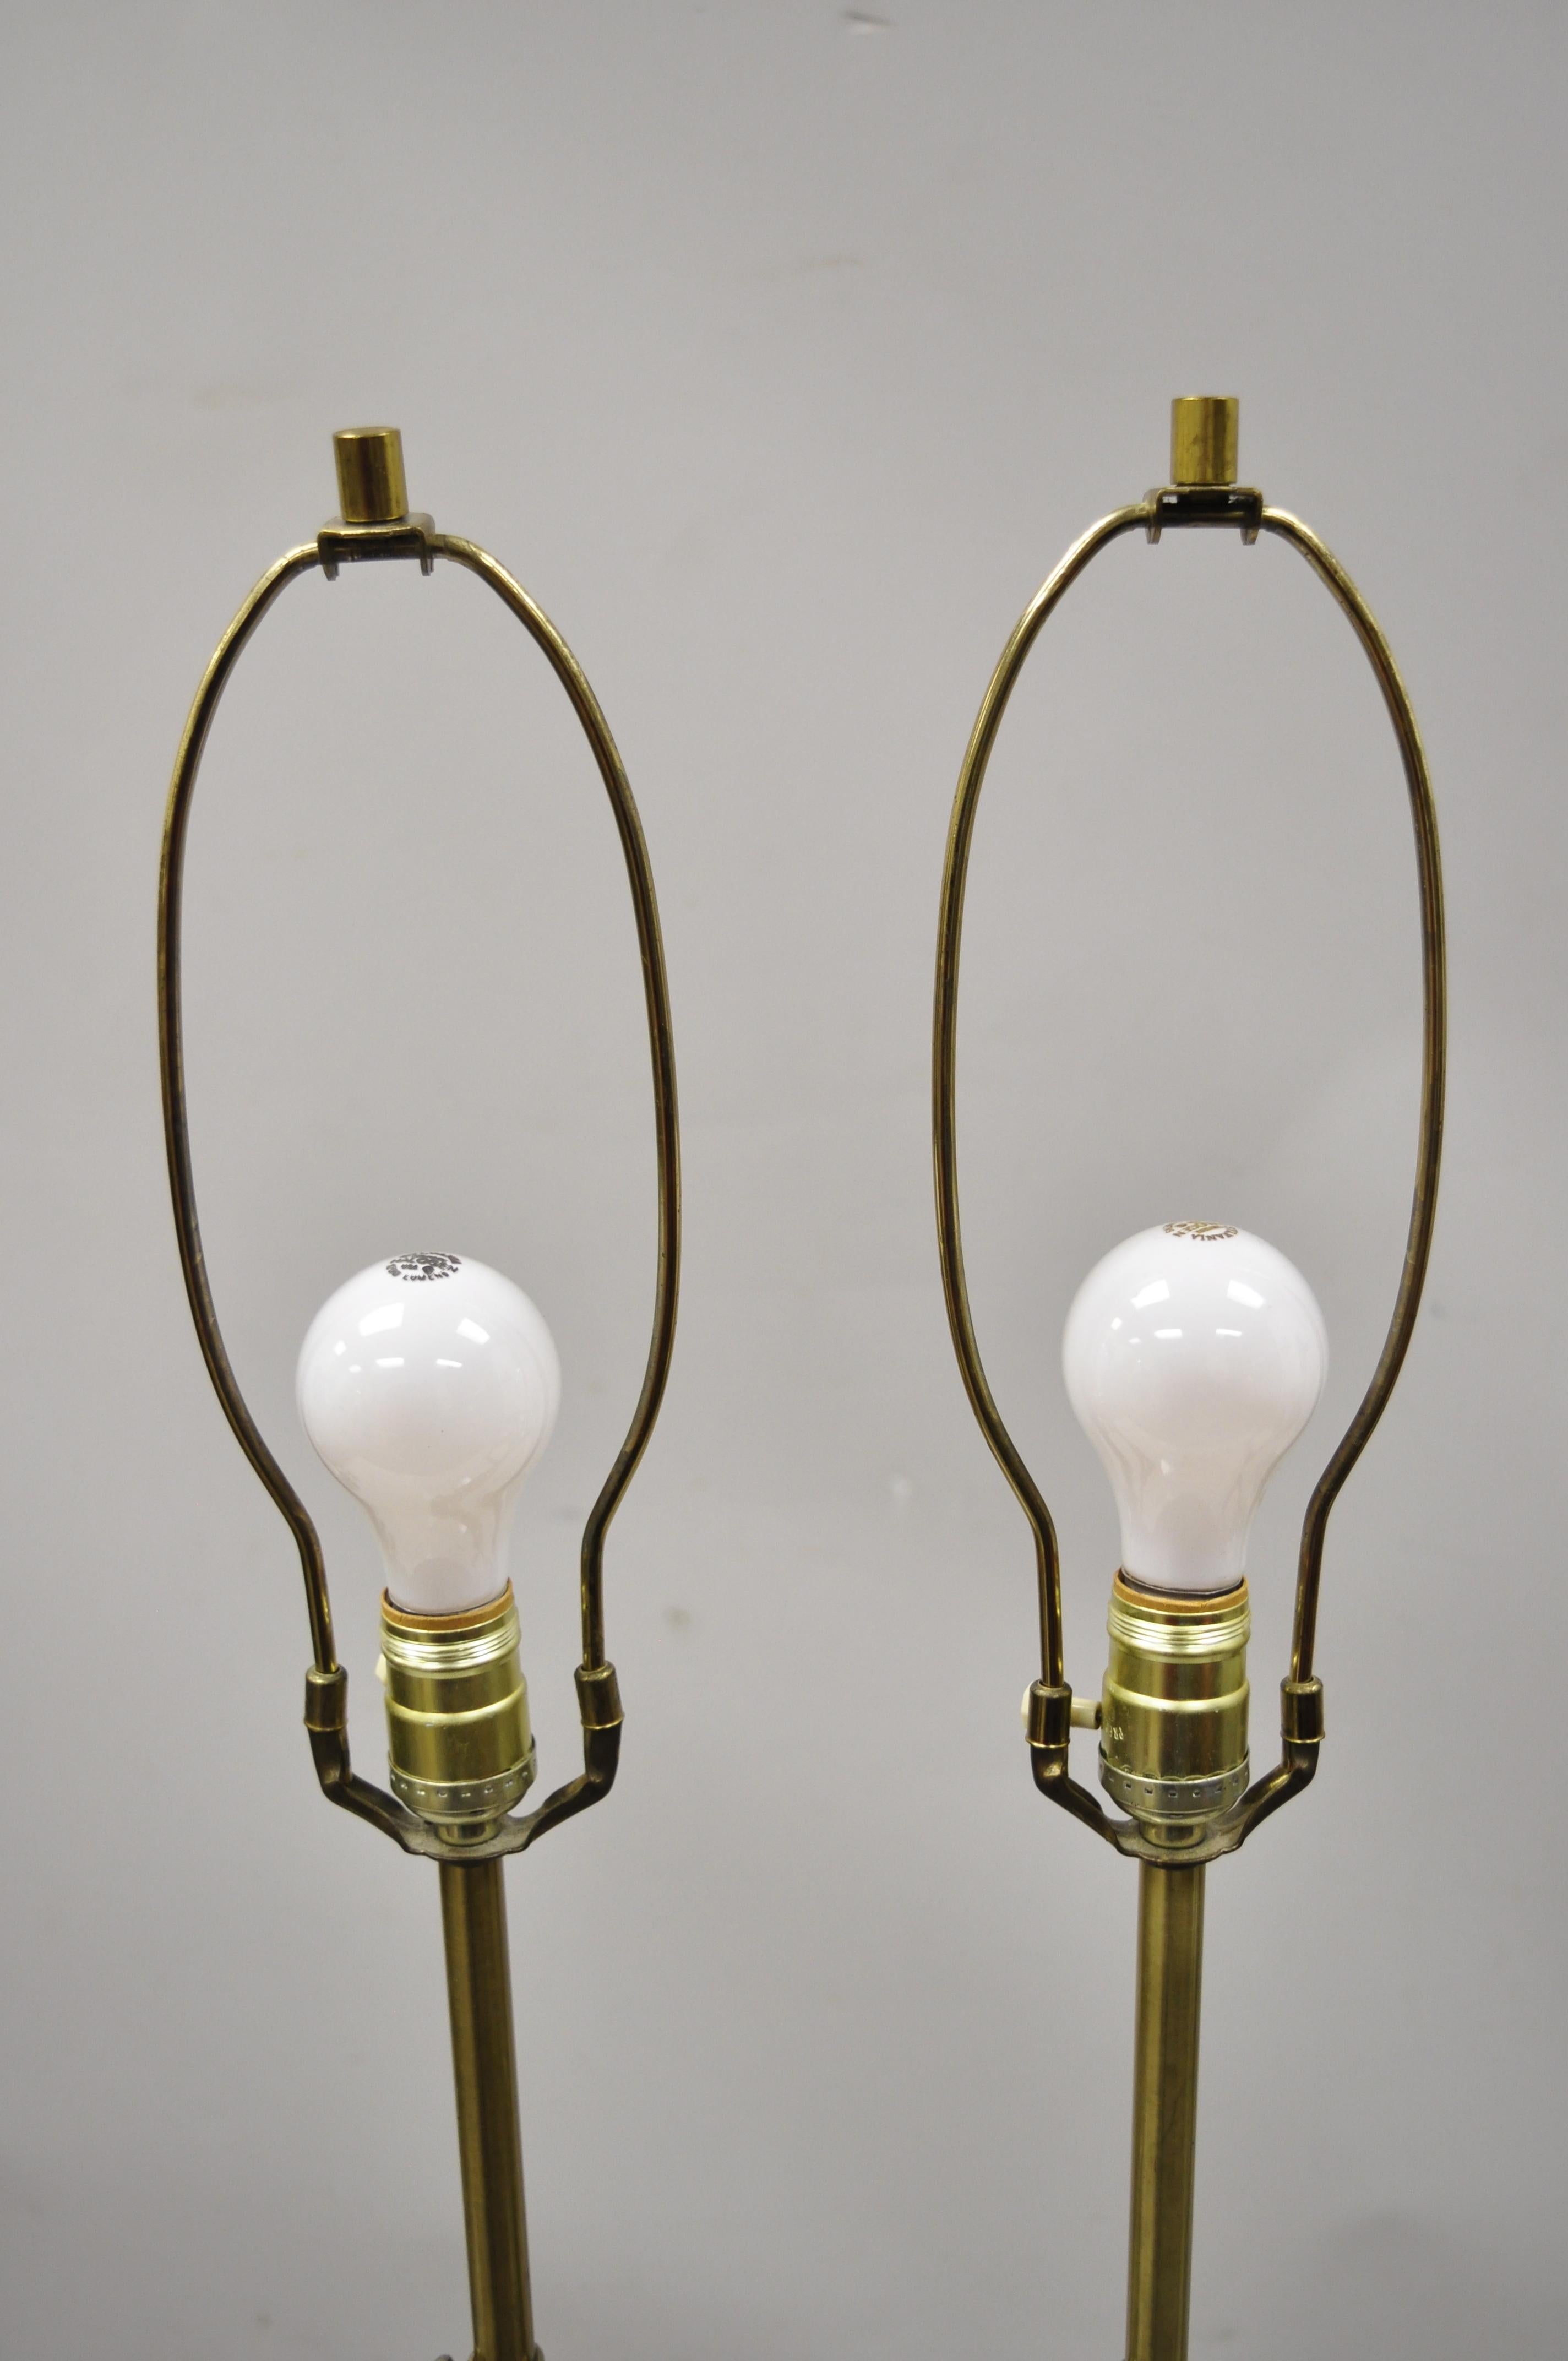 Laurel Midcentury Brutalist Modernist Brass Sculptural Table Lamps, a Pair For Sale 2